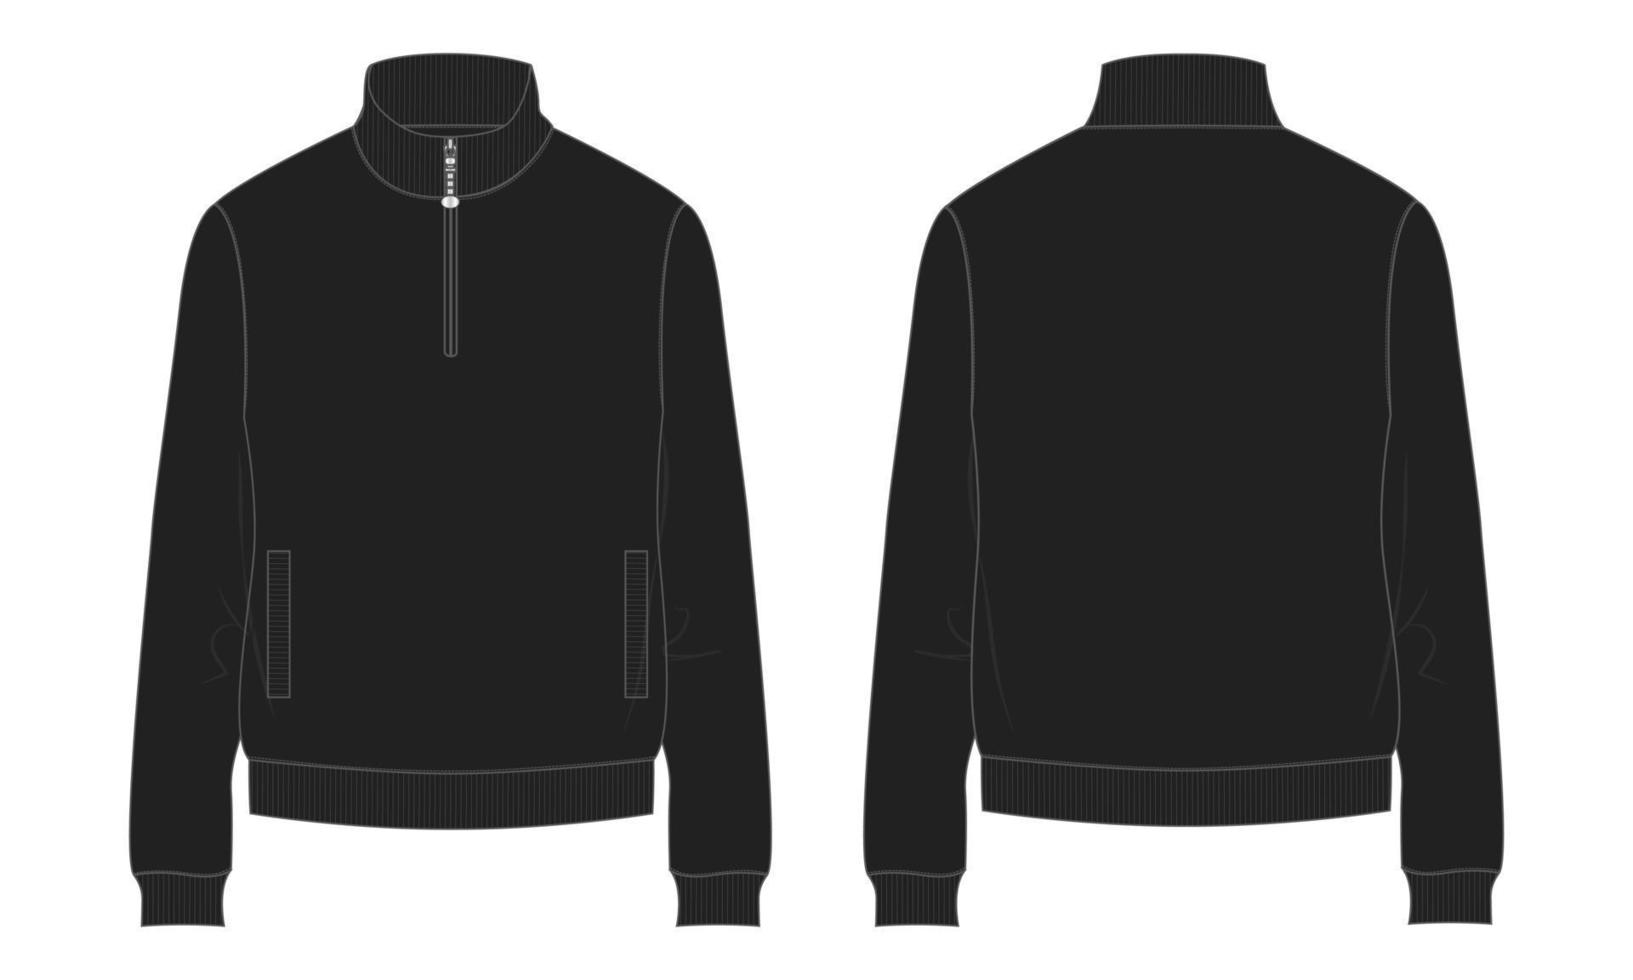 Long sleeve with Short zip fleece jacket  Sweatshirt technical fashion Flat sketch Vector illustration black Color template Front, back views.